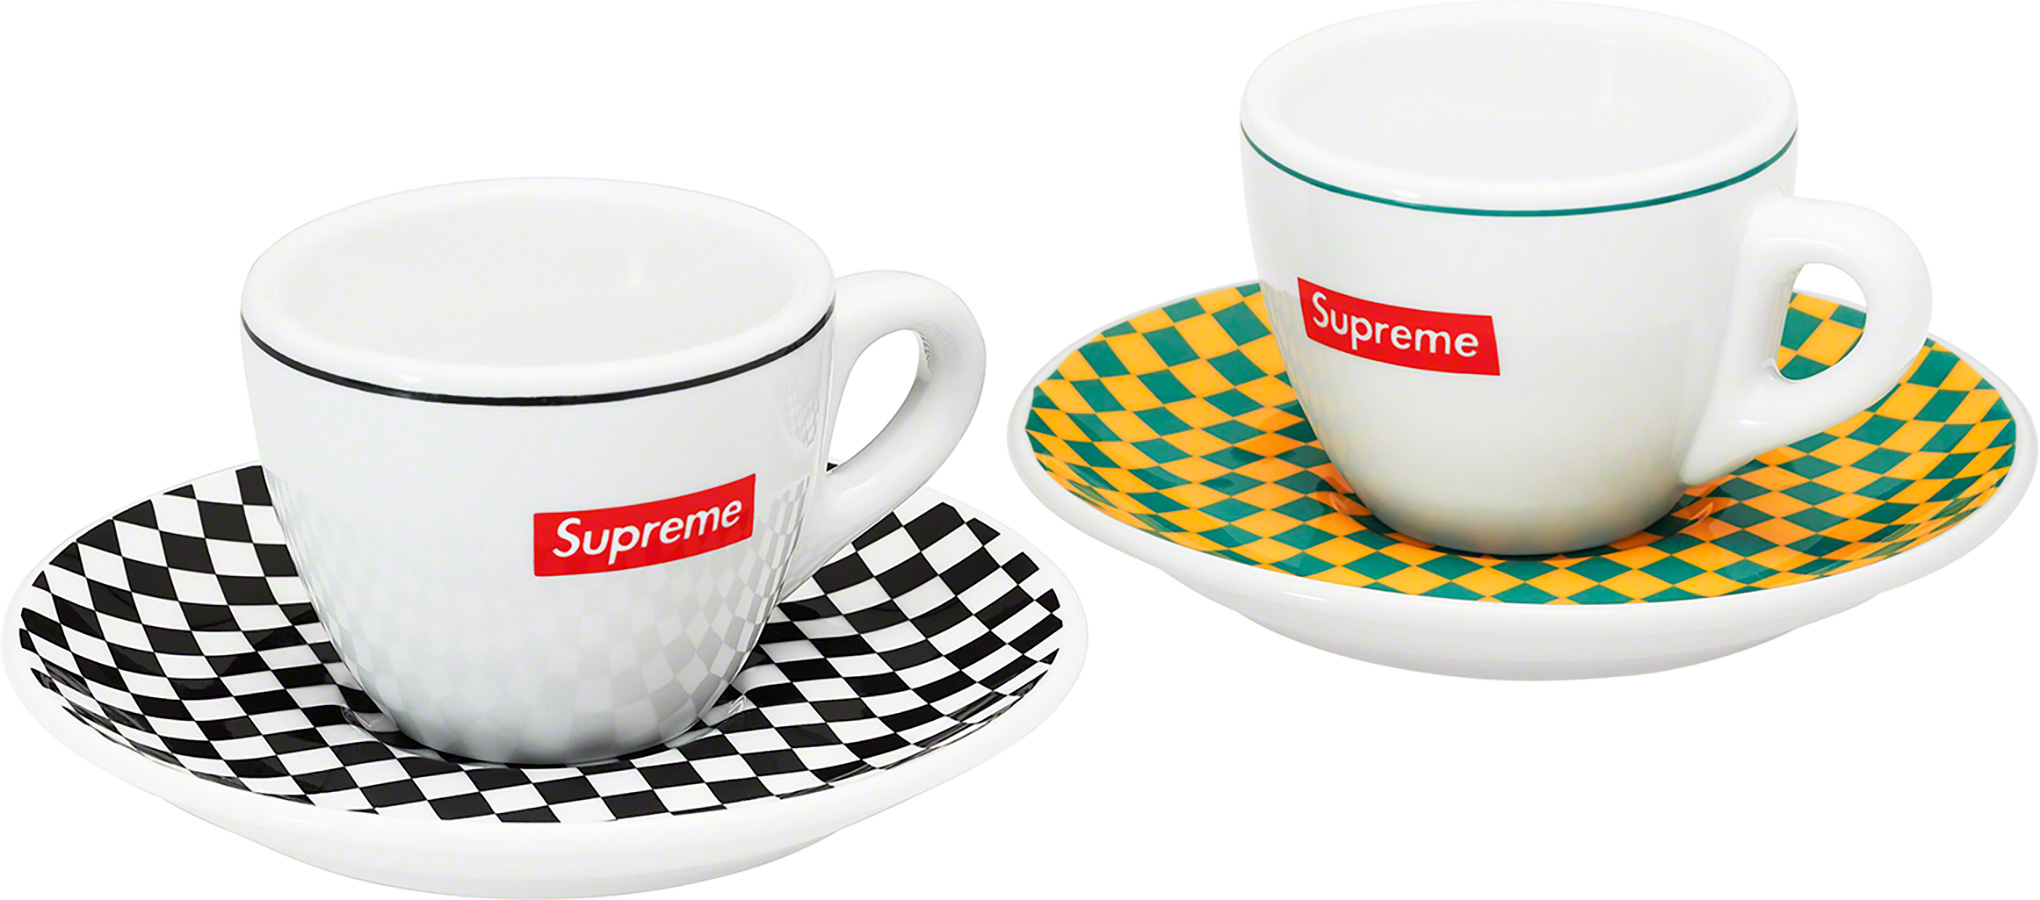 Supreme®/IPA Porcellane Aosta Espresso Set (Set of 2) - Supreme 